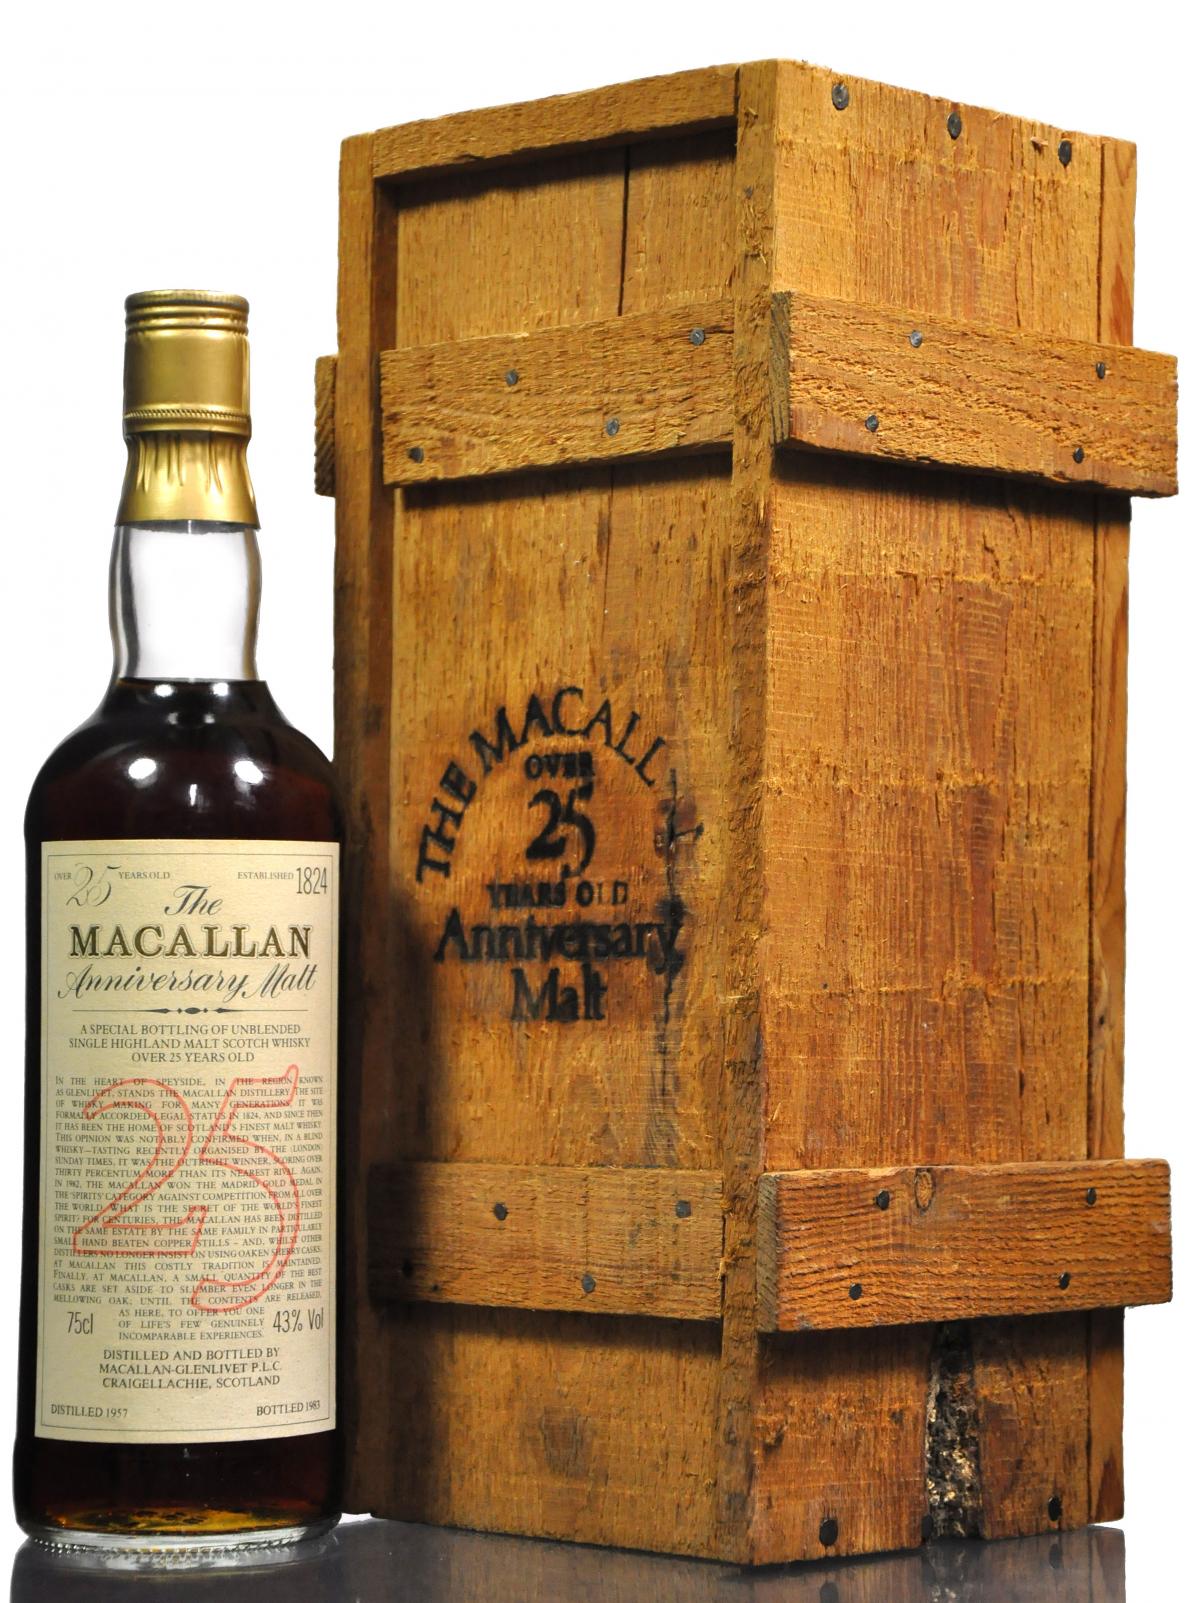 Macallan 1957-1983 - 25 Year Old Anniversary Malt